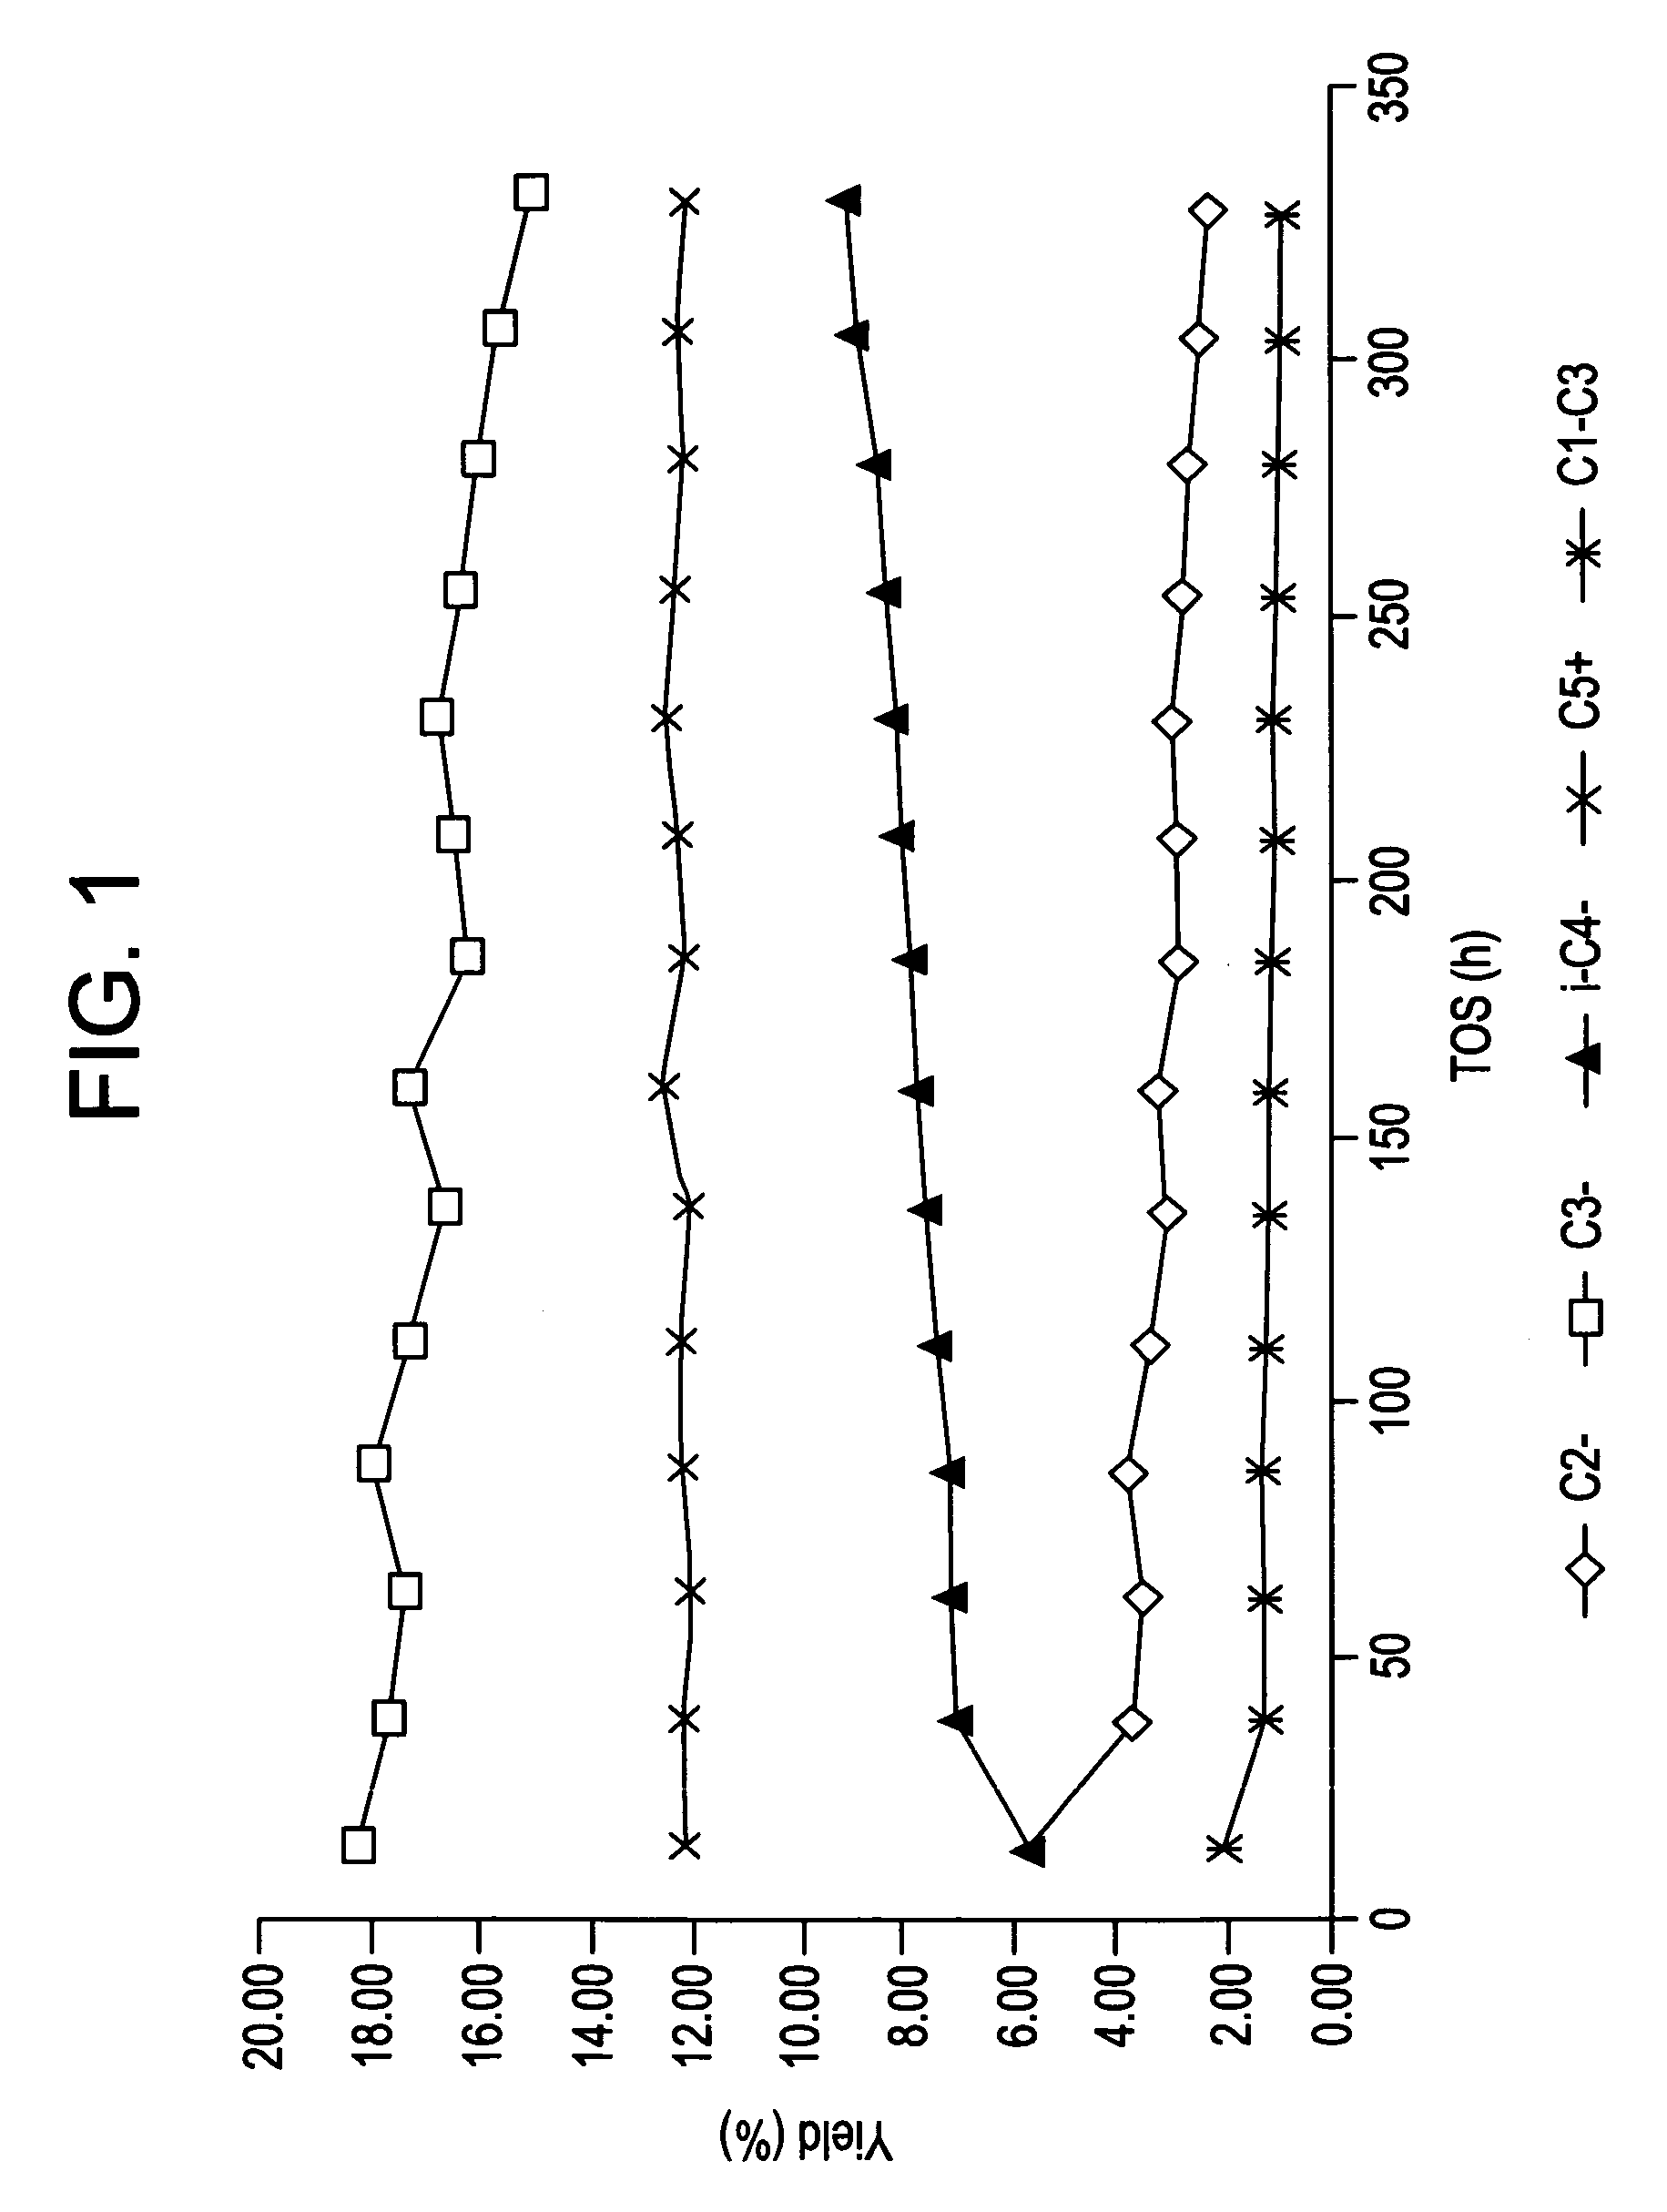 Production of propylene